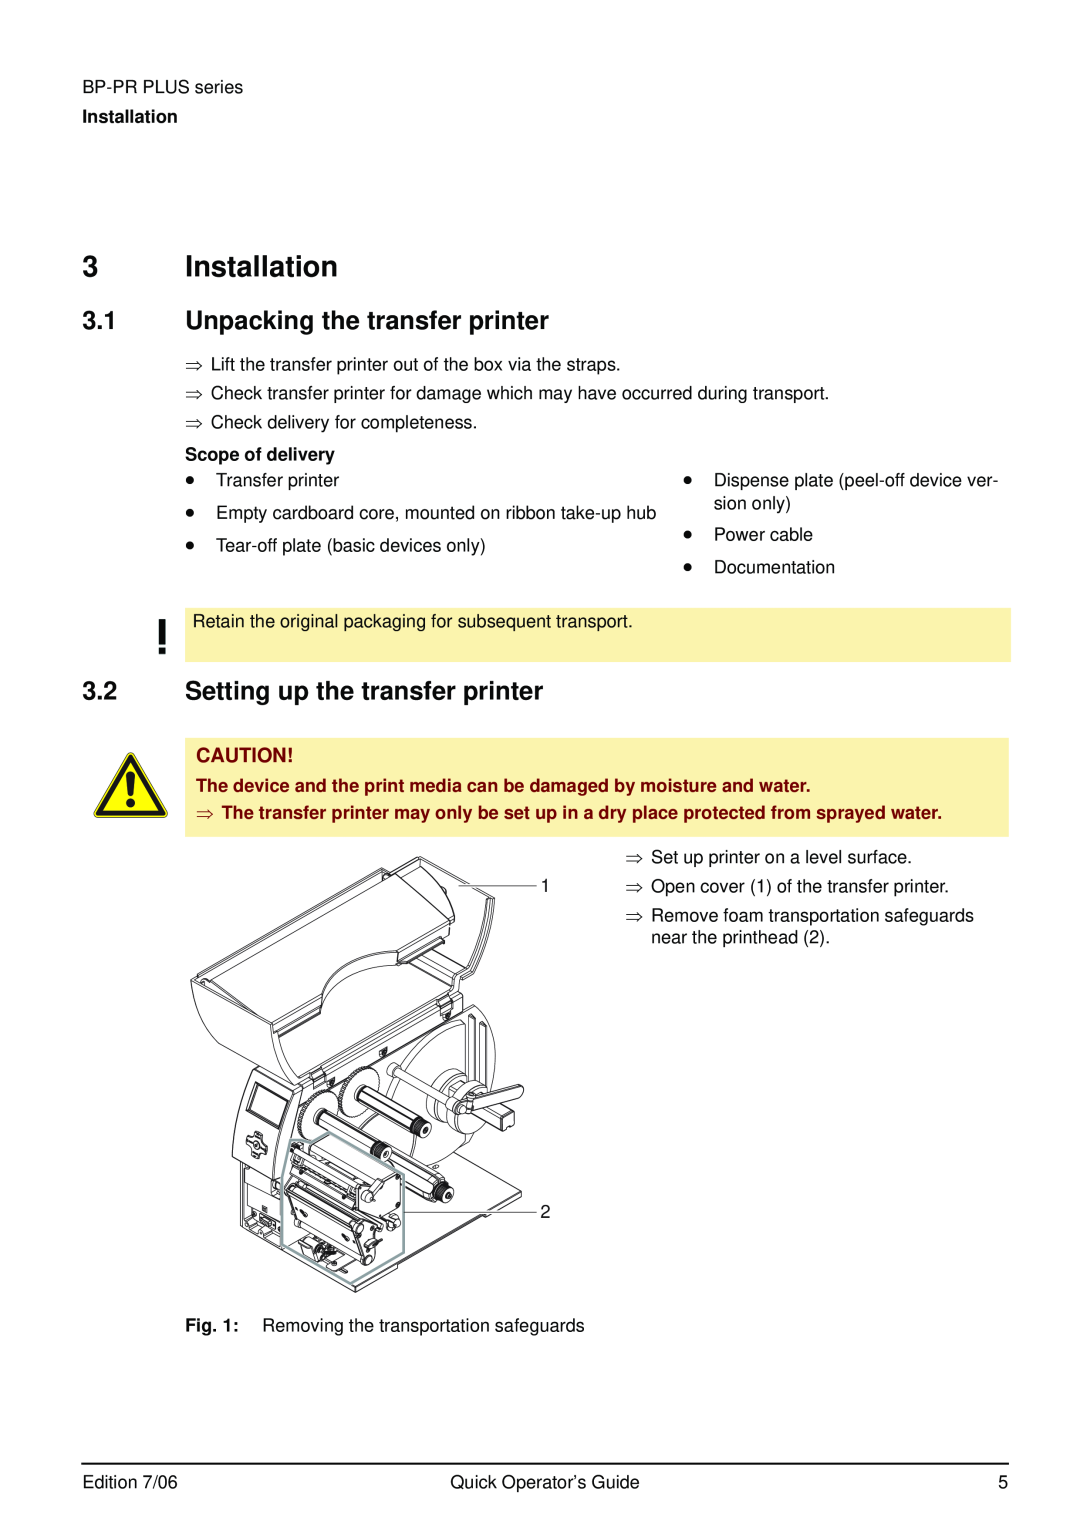 Brady BP-PR PLUS Series manual Installation, Unpacking the transfer printer, Setting up the transfer printer 